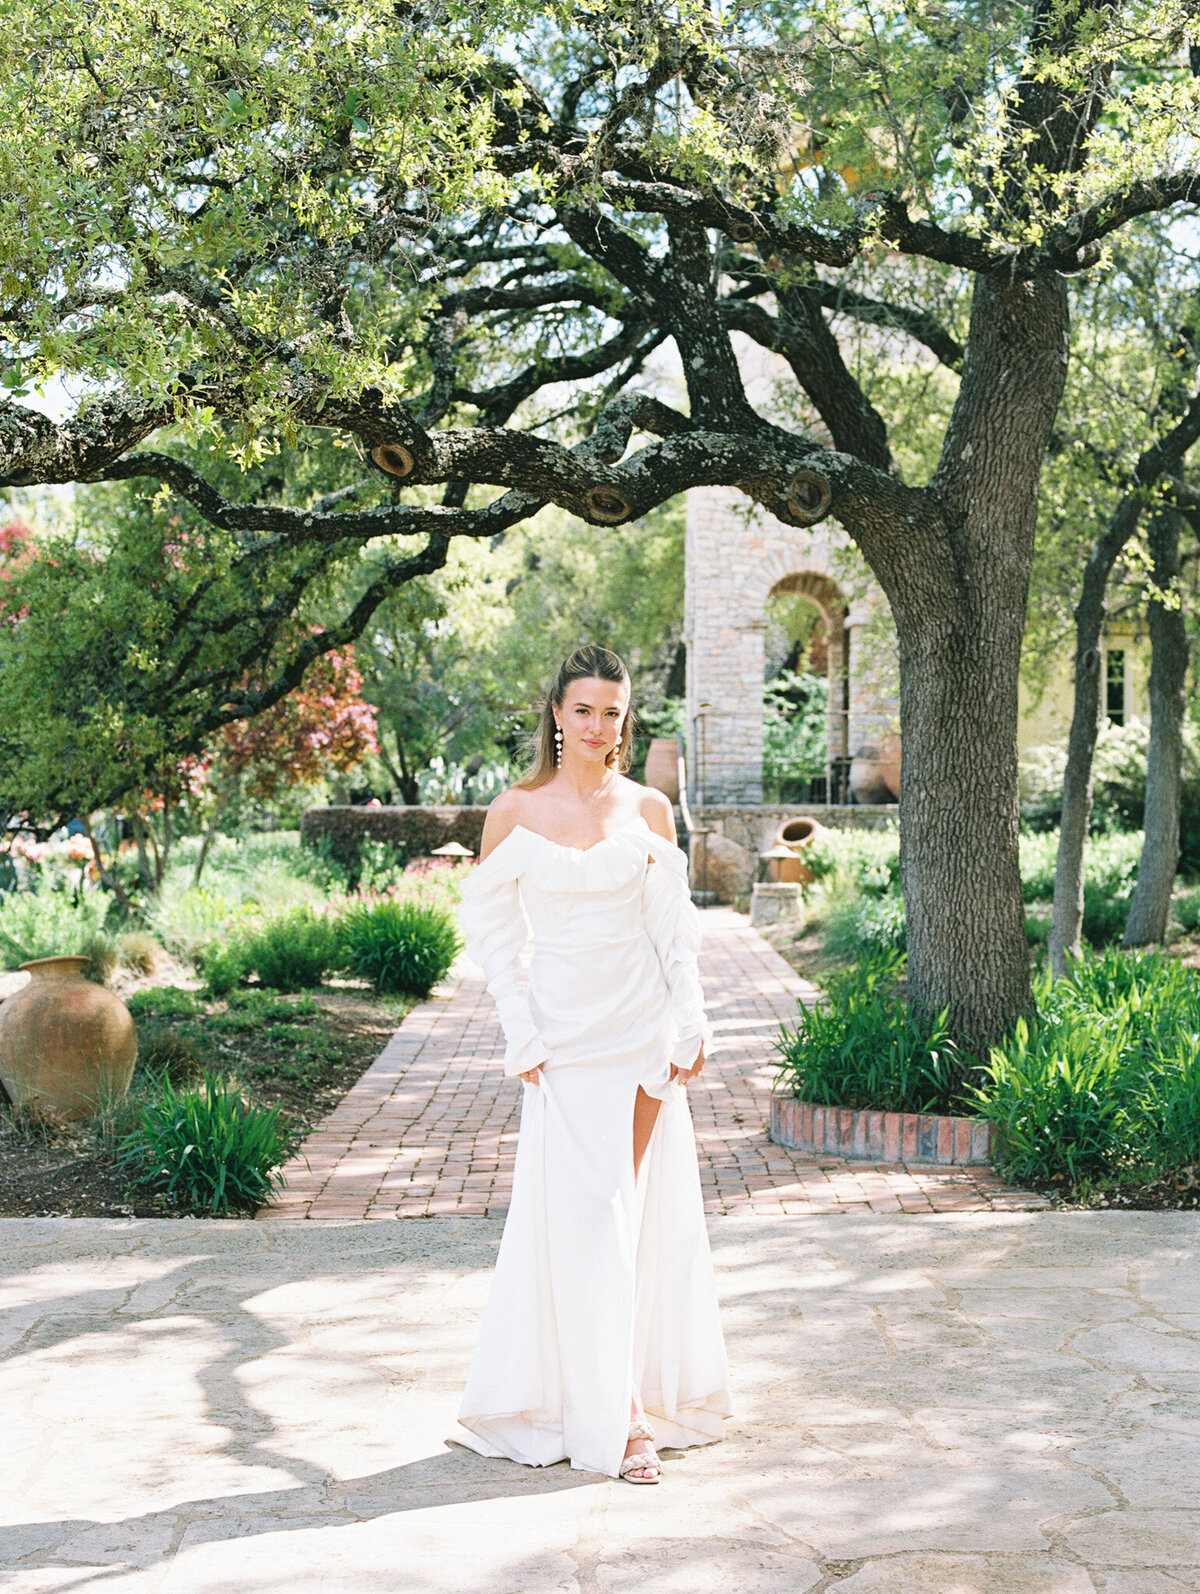 Lauren Baker Photography Destination wedding photographer Austin Texas